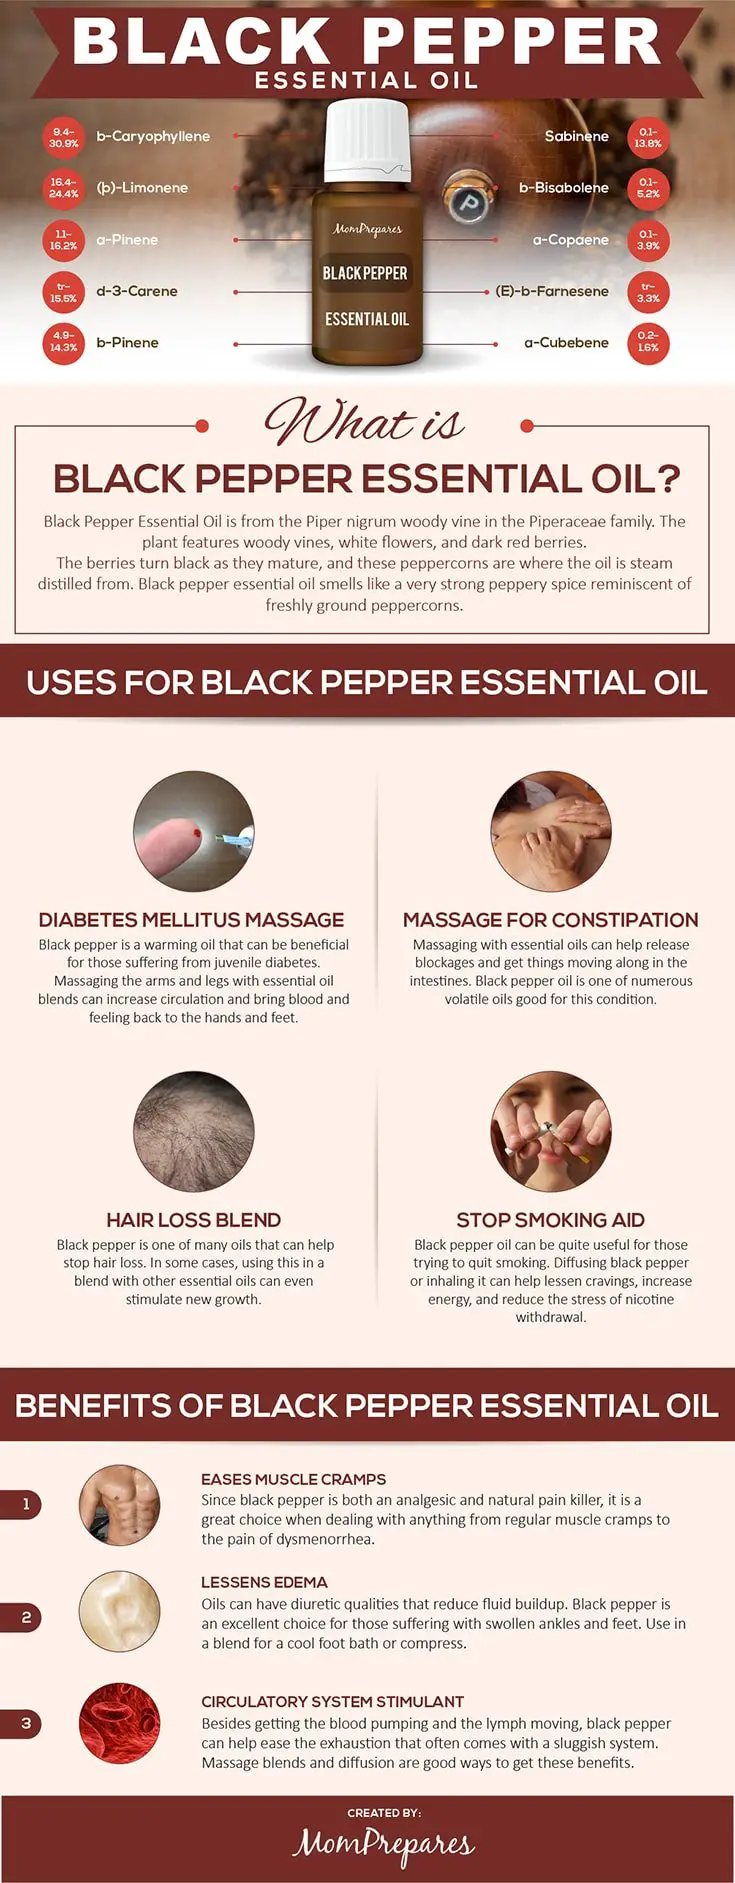 Black Pepper infographic